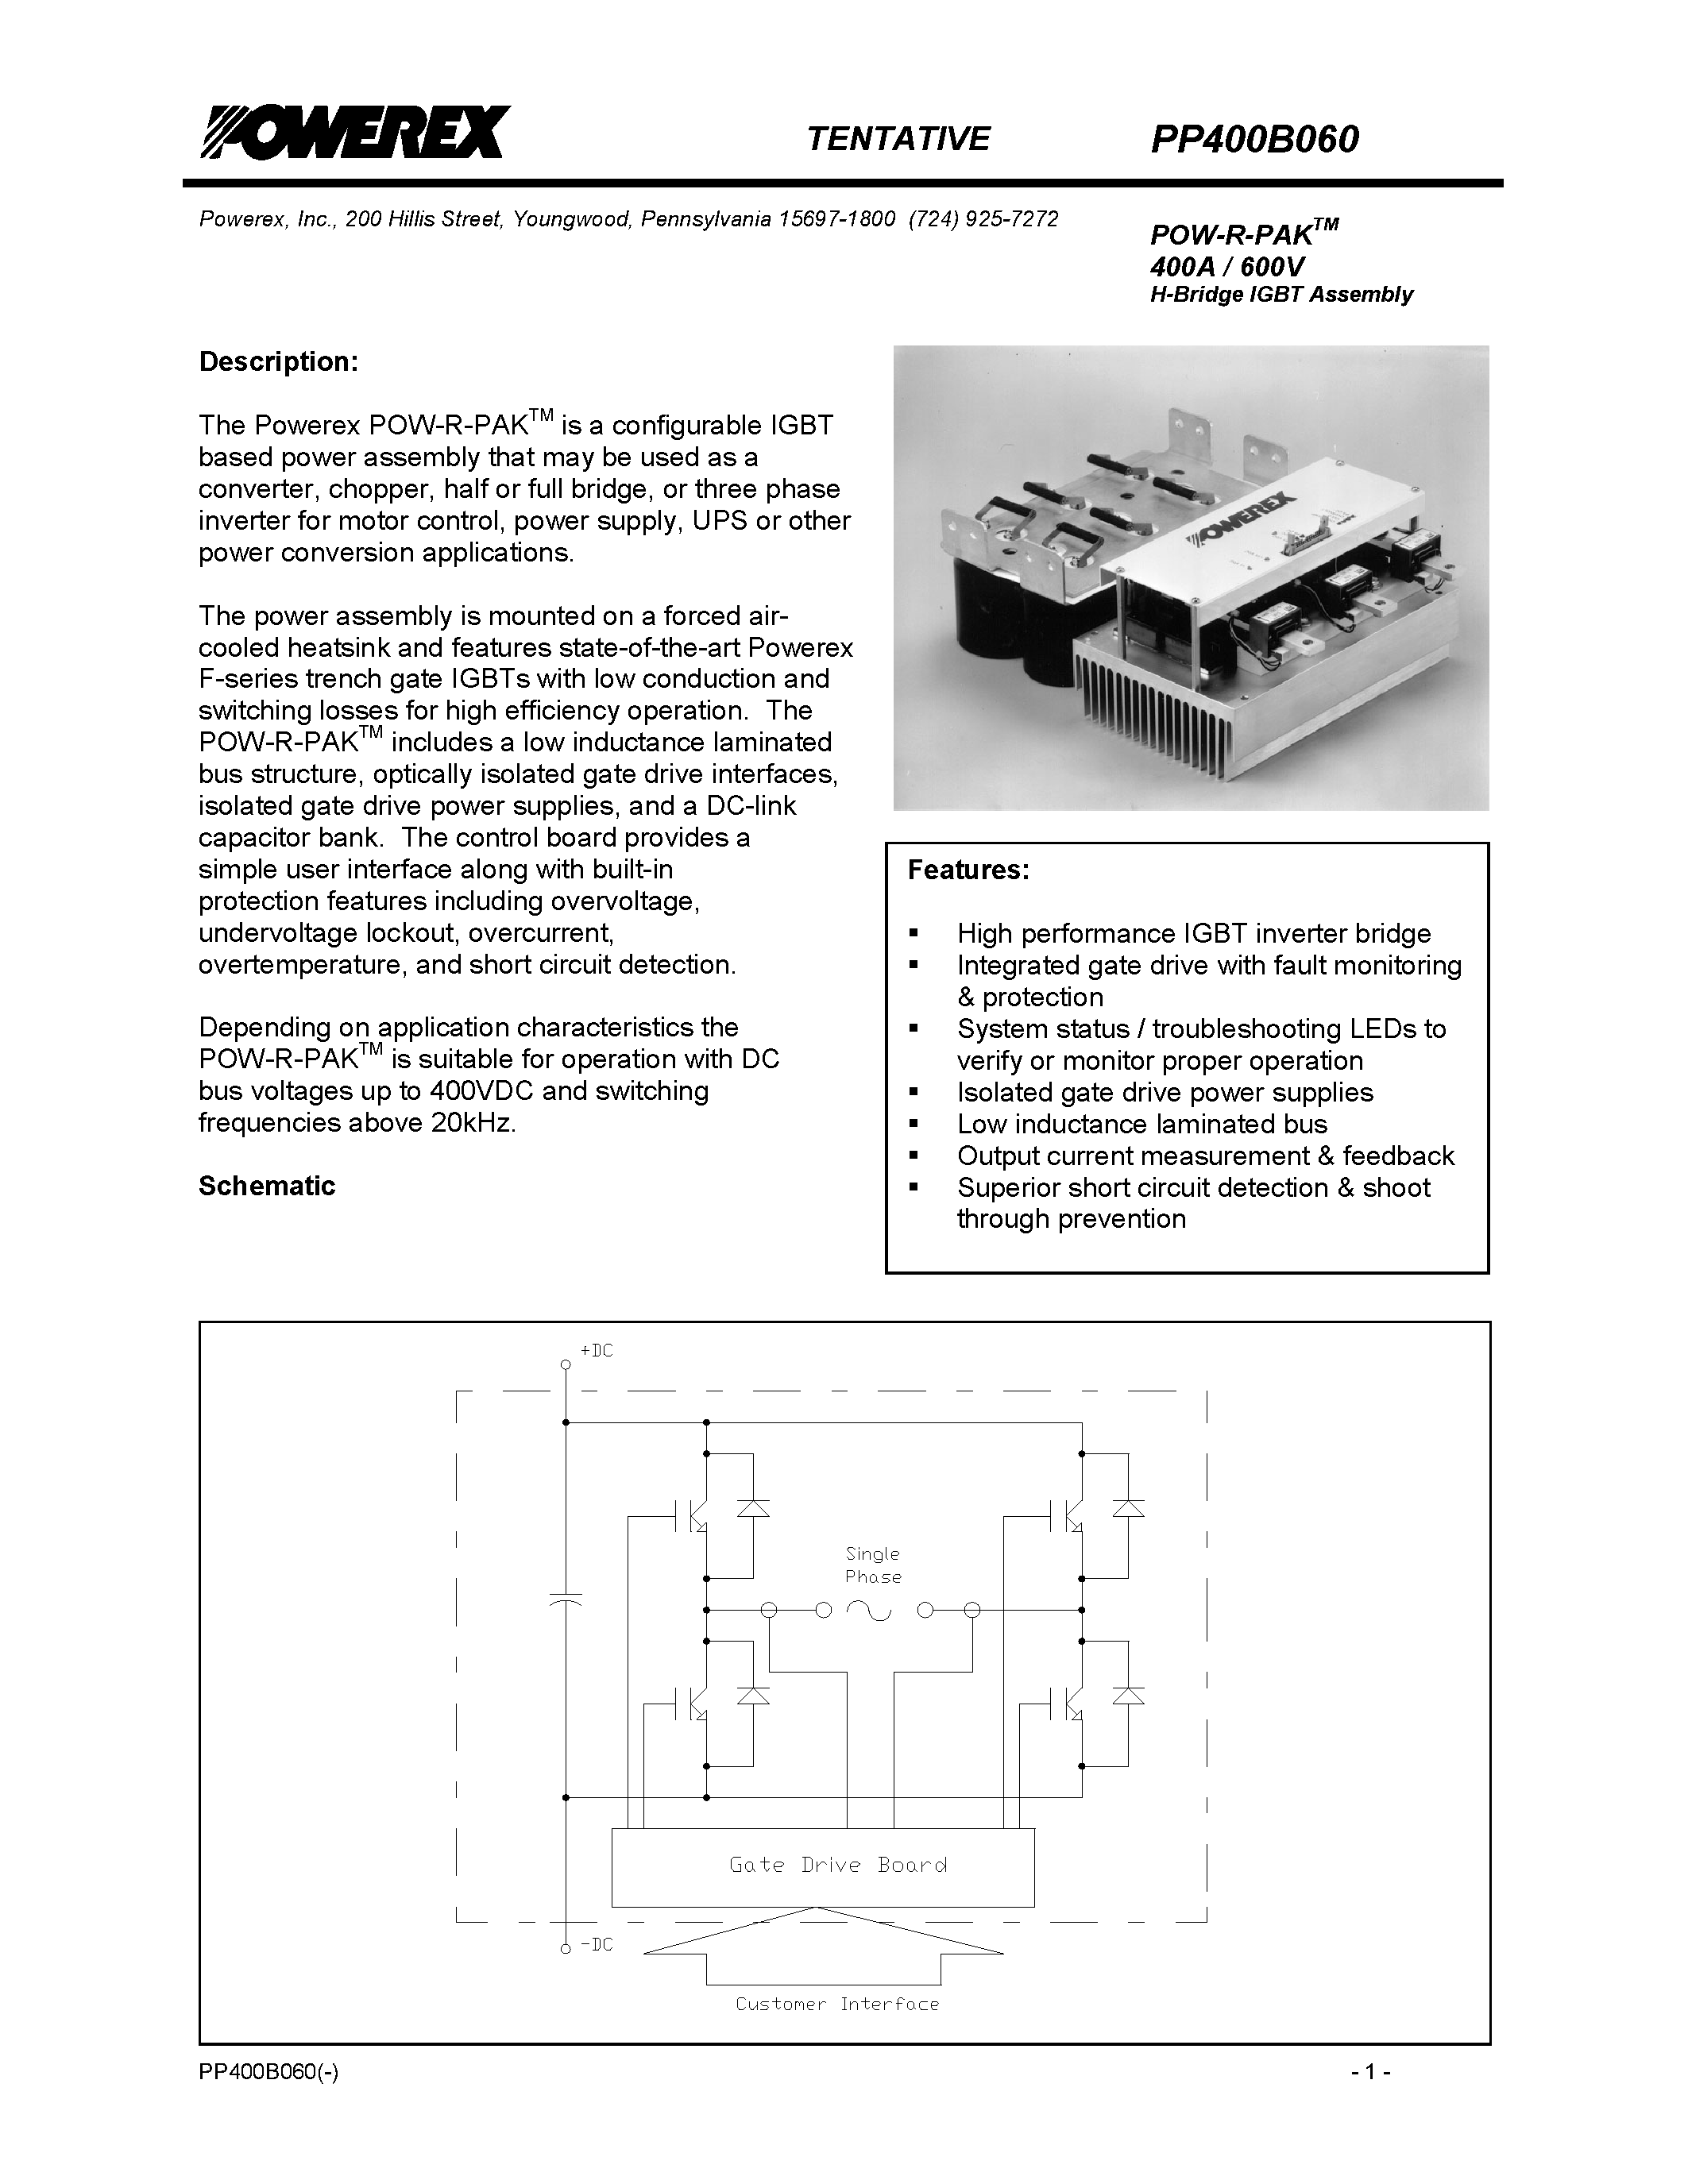 Datasheet PP400B060 - POW-R-PAK 400A / 600V H-Bridge IGBT Assembly page 1